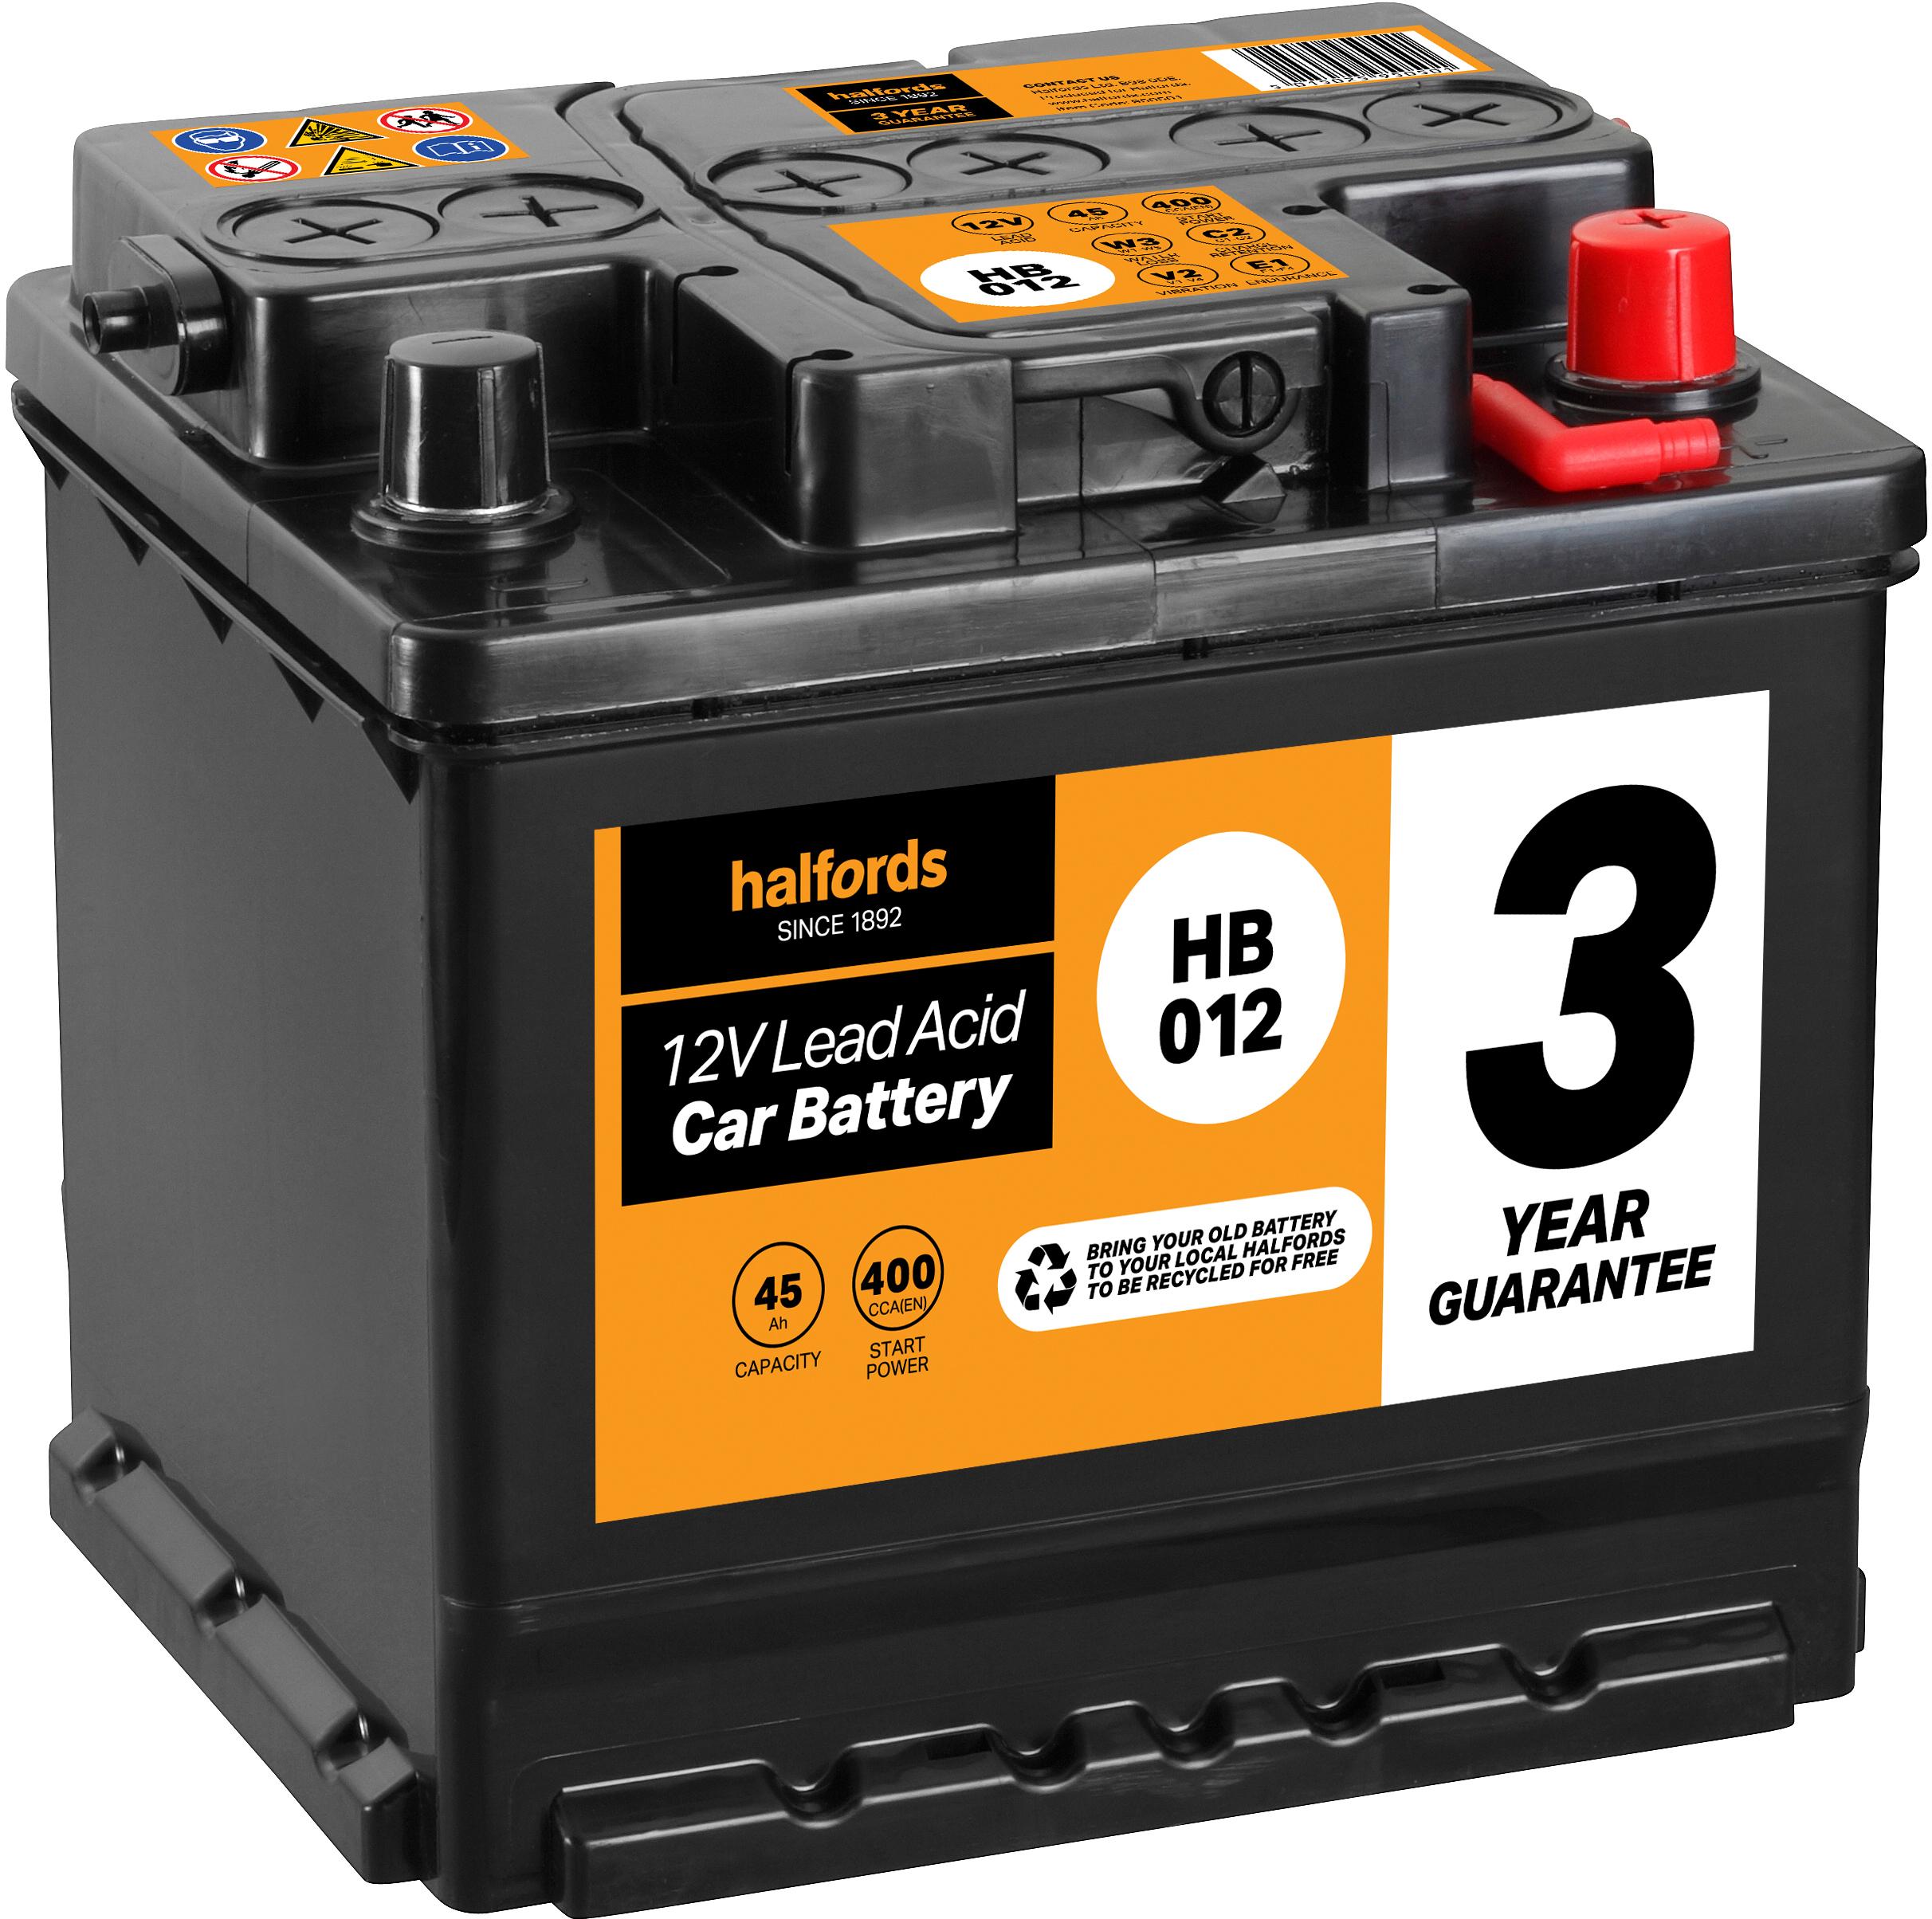 Halfords Hb012 Lead Acid 12V Car Battery 3 Year Guarantee